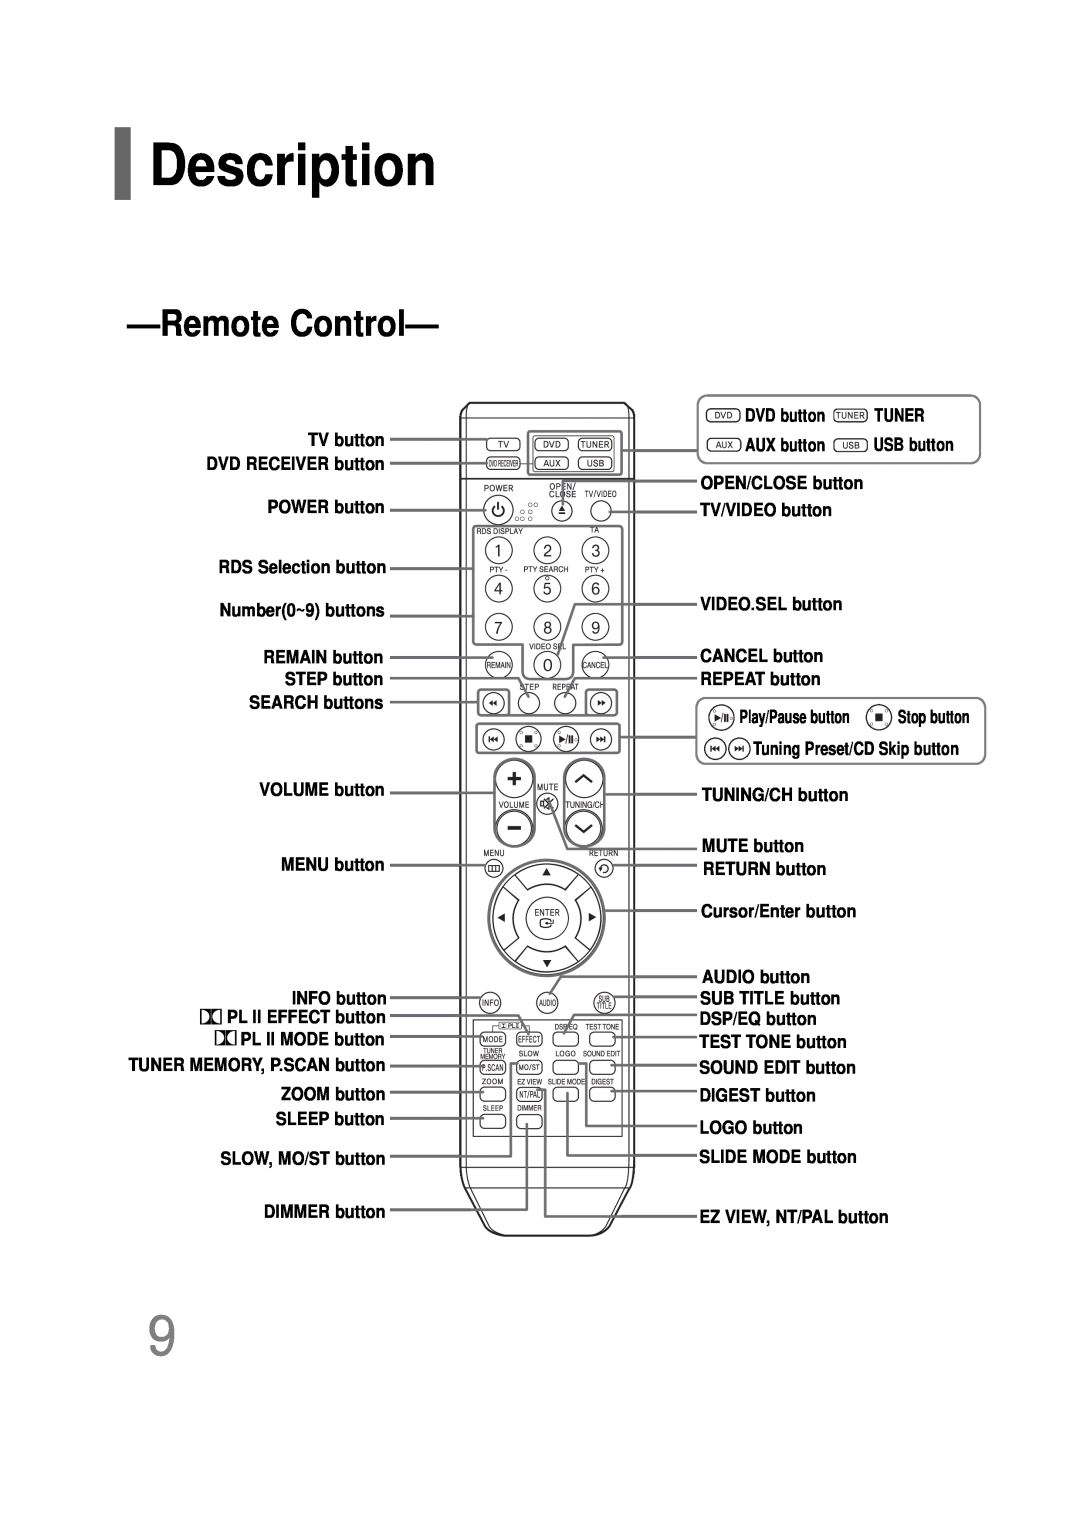 Samsung HT-Q20, HT-TQ22 RemoteControl, Description, TV button DVD RECEIVER button POWER button, VOLUME button MENU button 